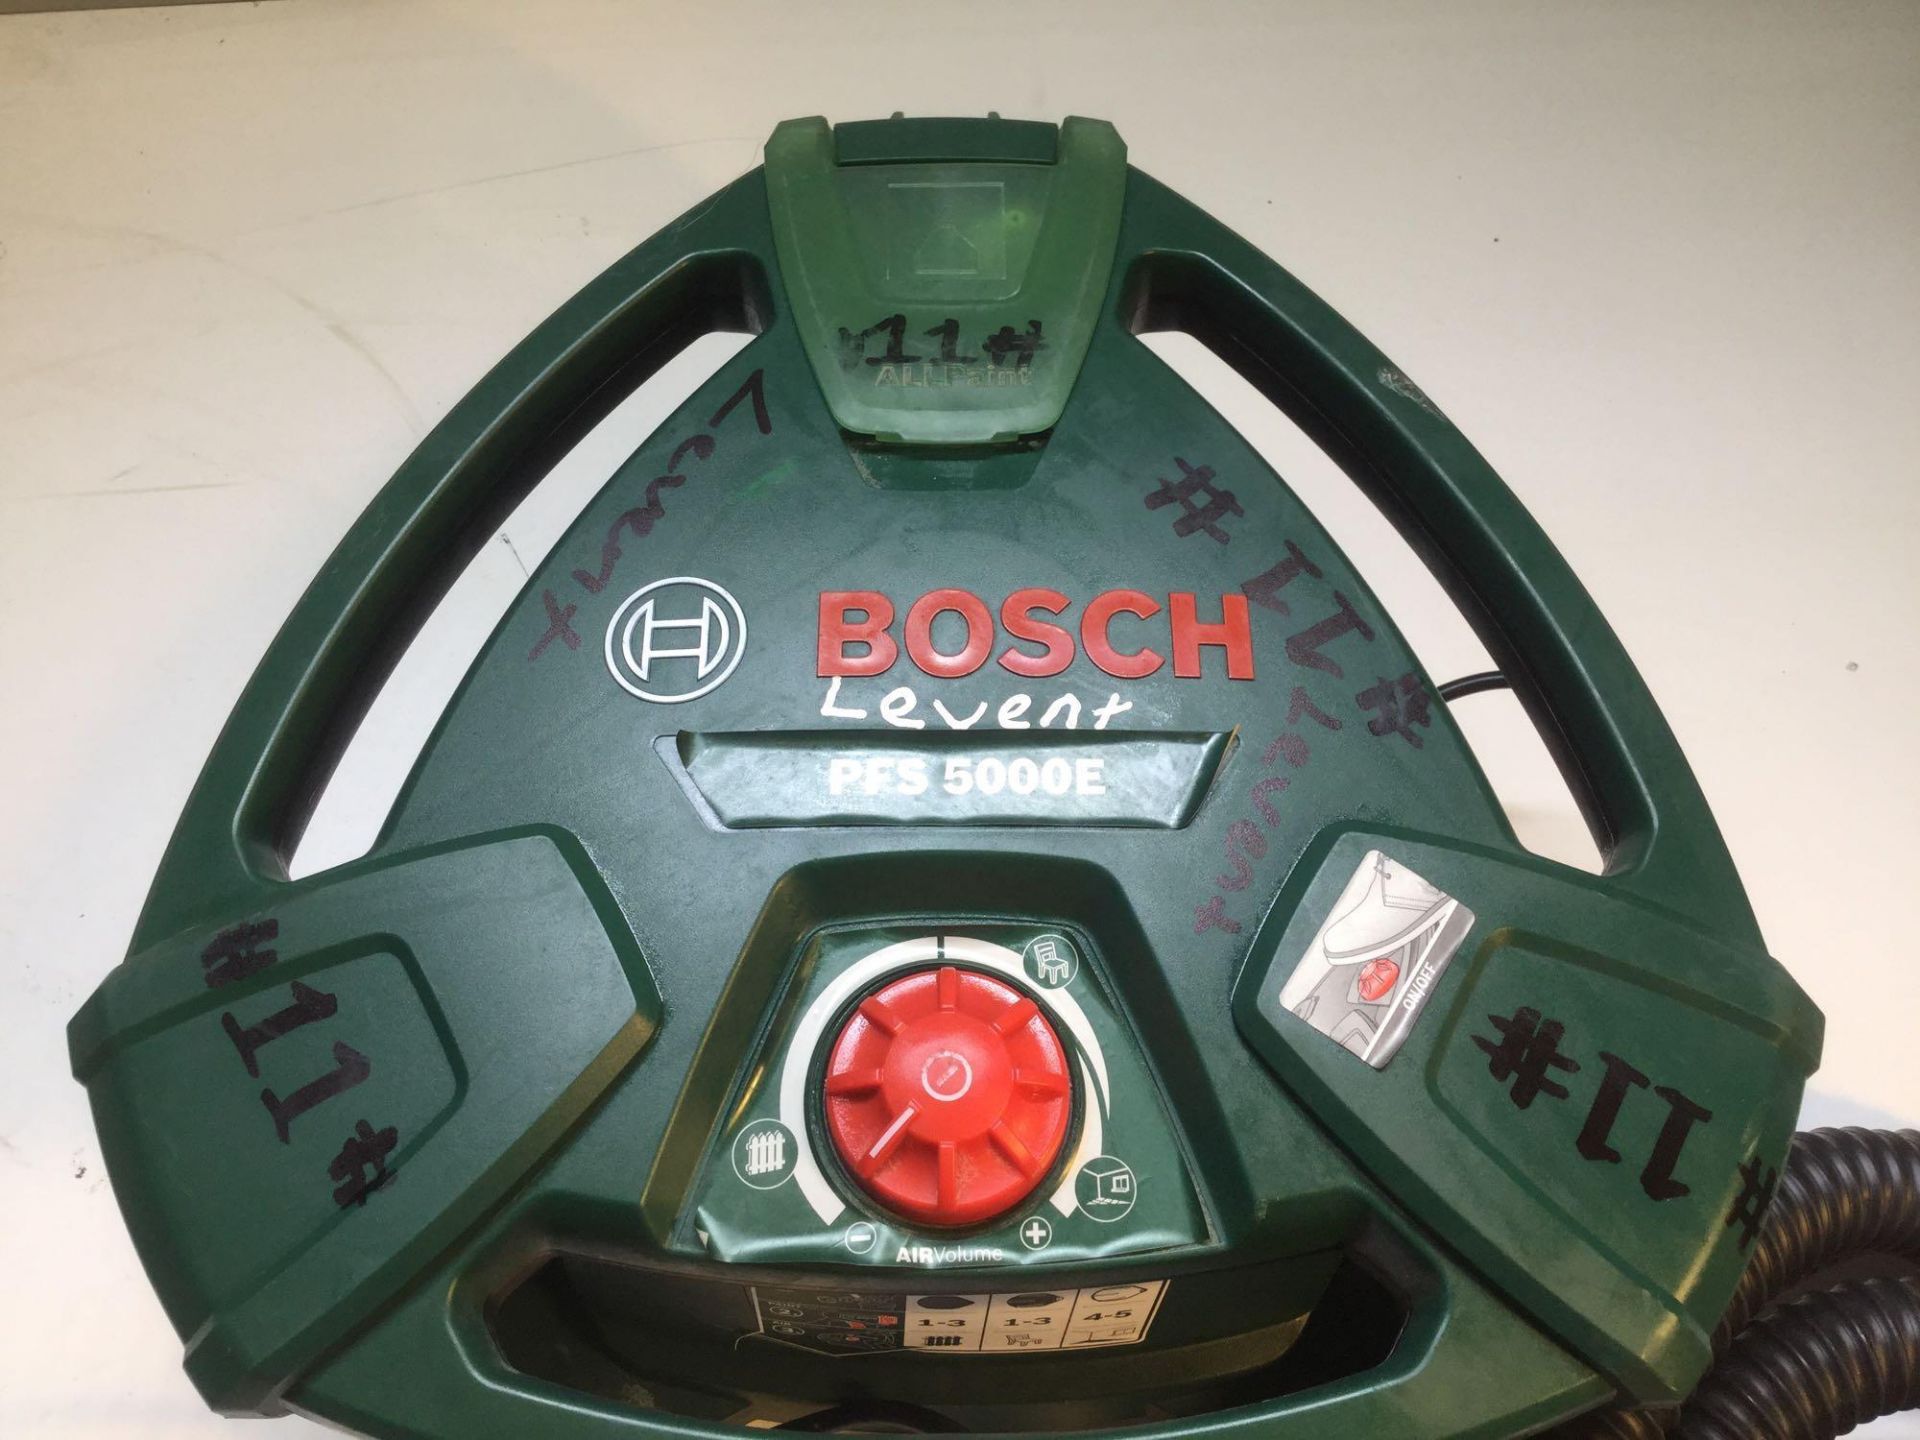 Bosch PFS 5000E Air Volume Sprayer - Image 2 of 3